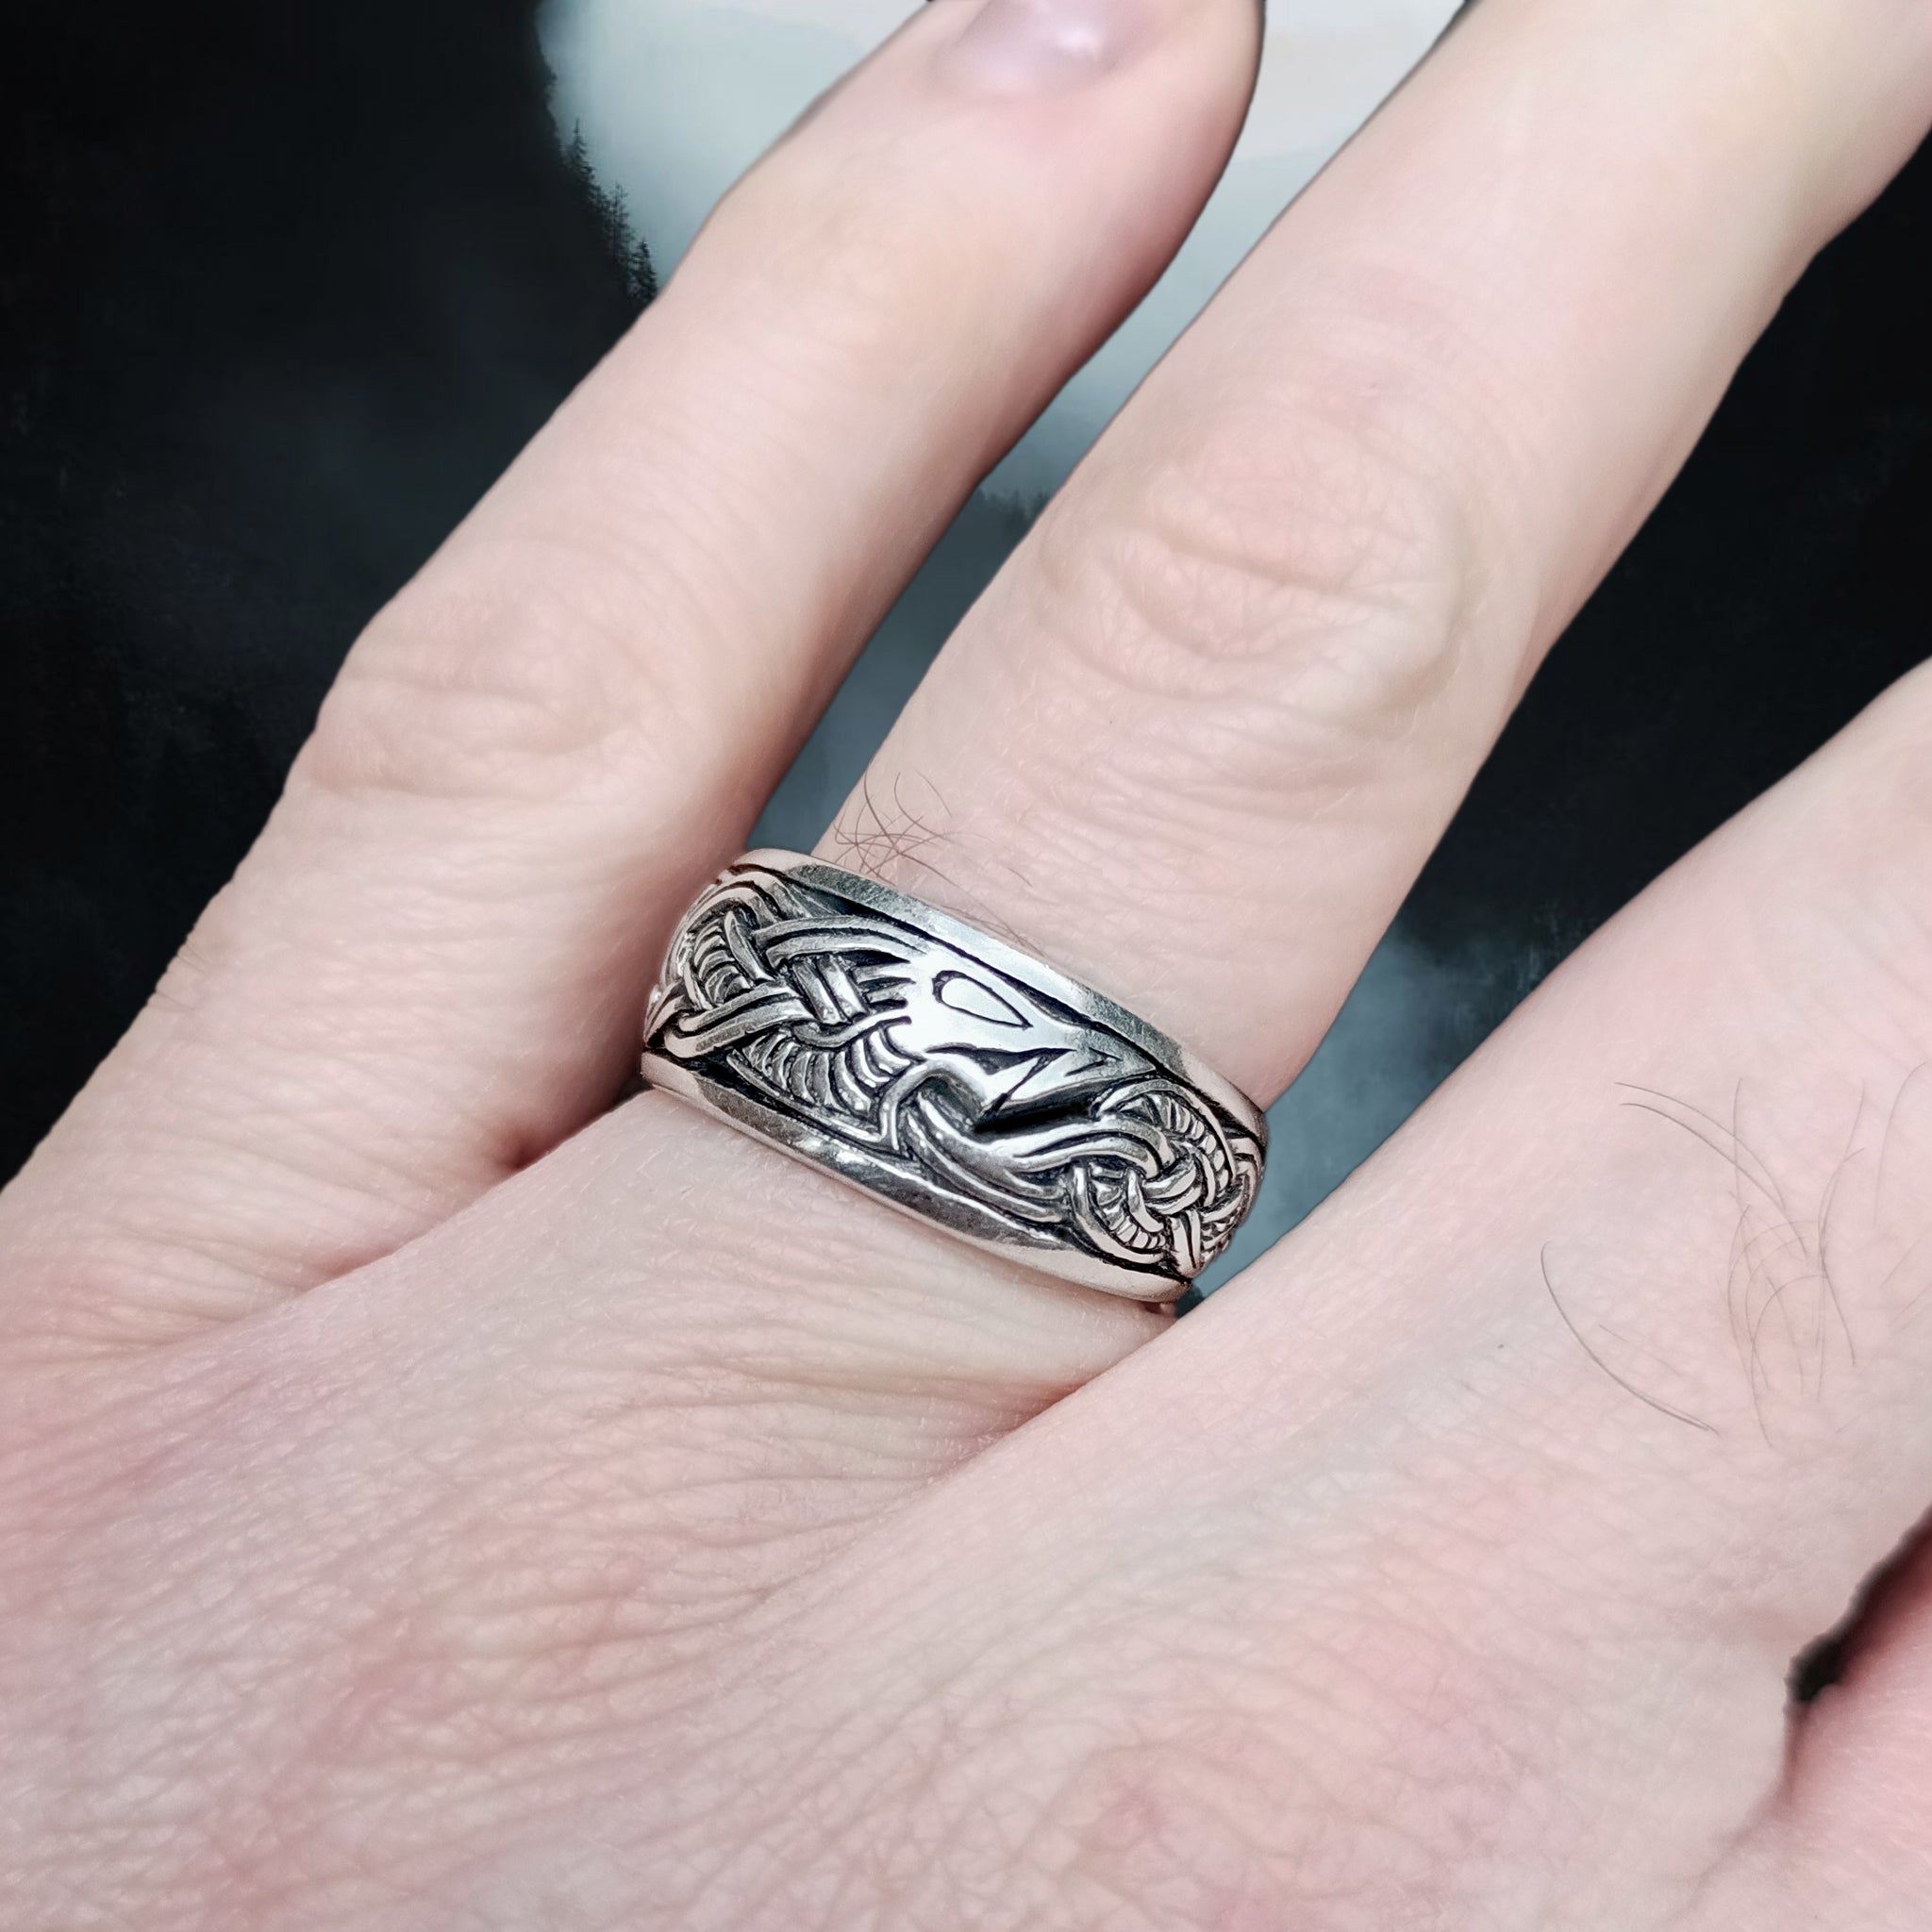 Large Silver Viking Dragon Ring on Finger